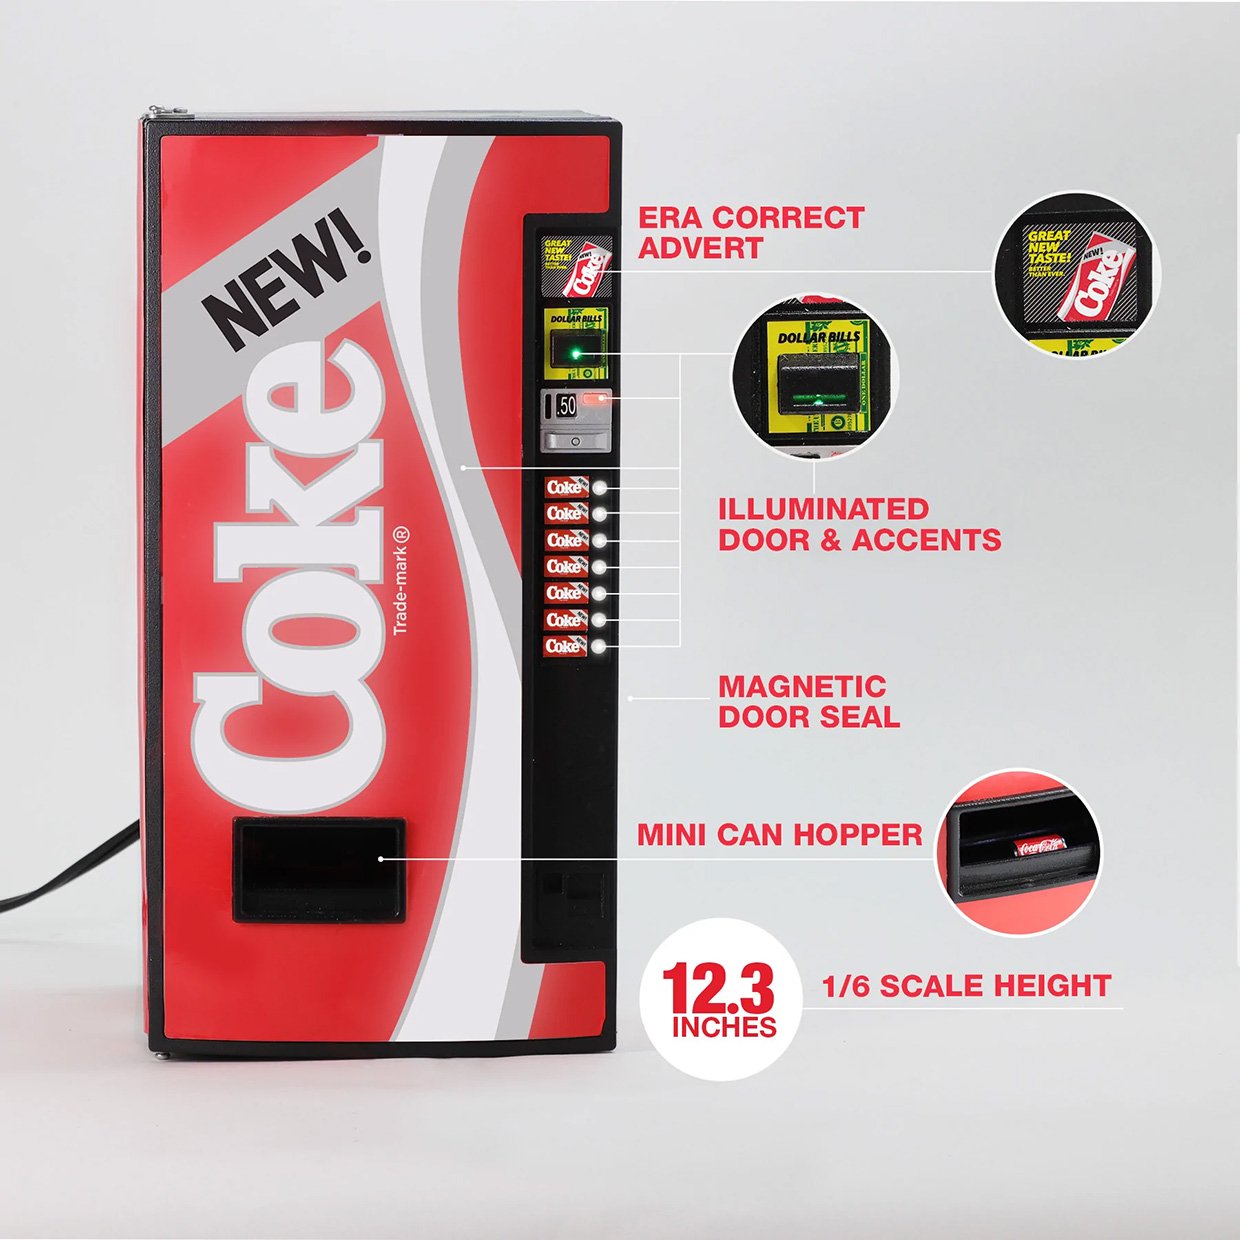 Mini Coca-Cola Machine + Fridge